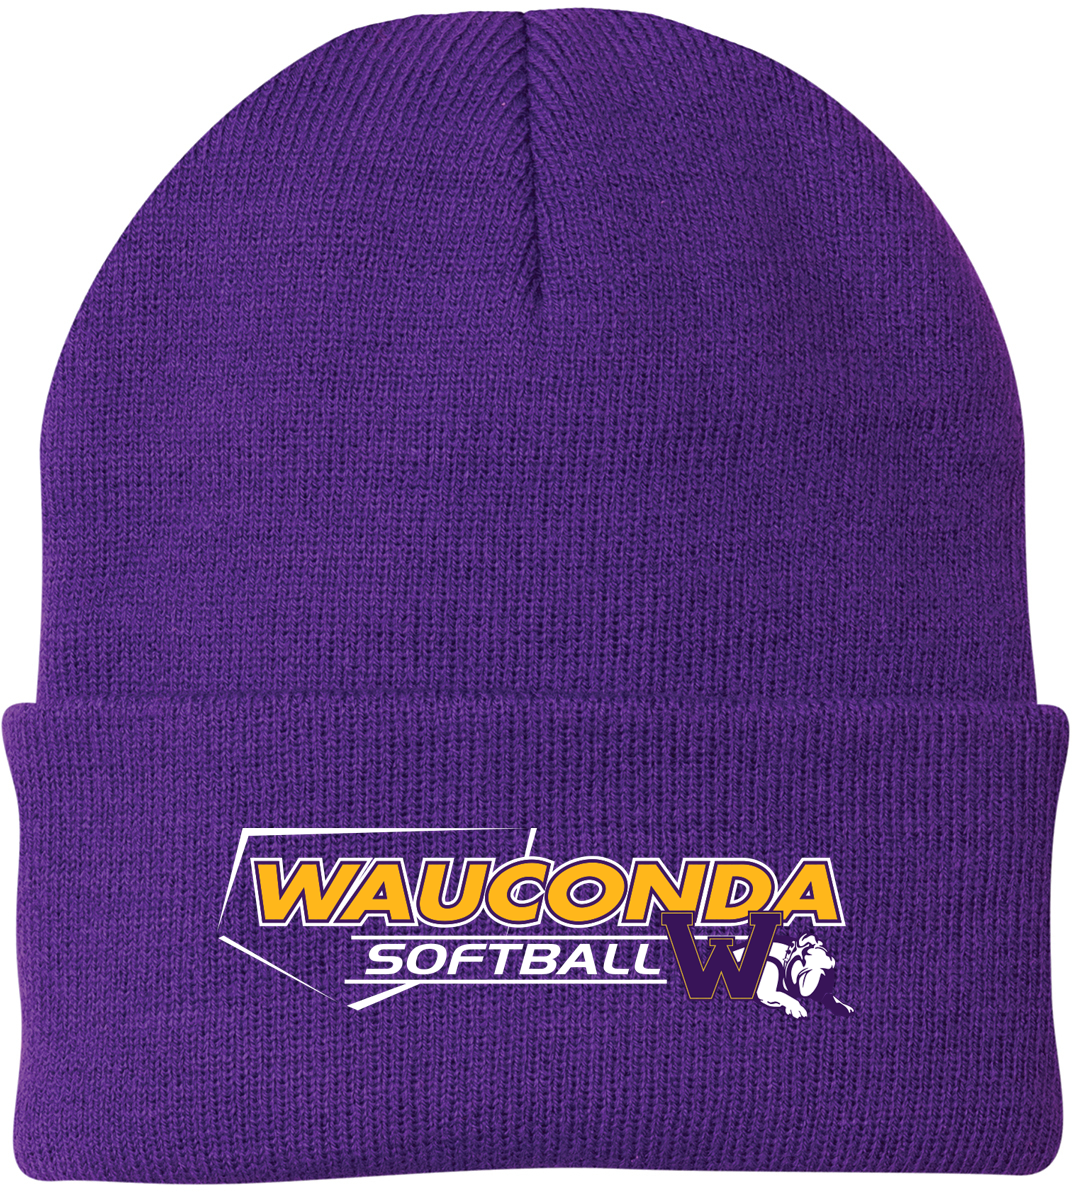 Wauconda Softball Knit Beanie